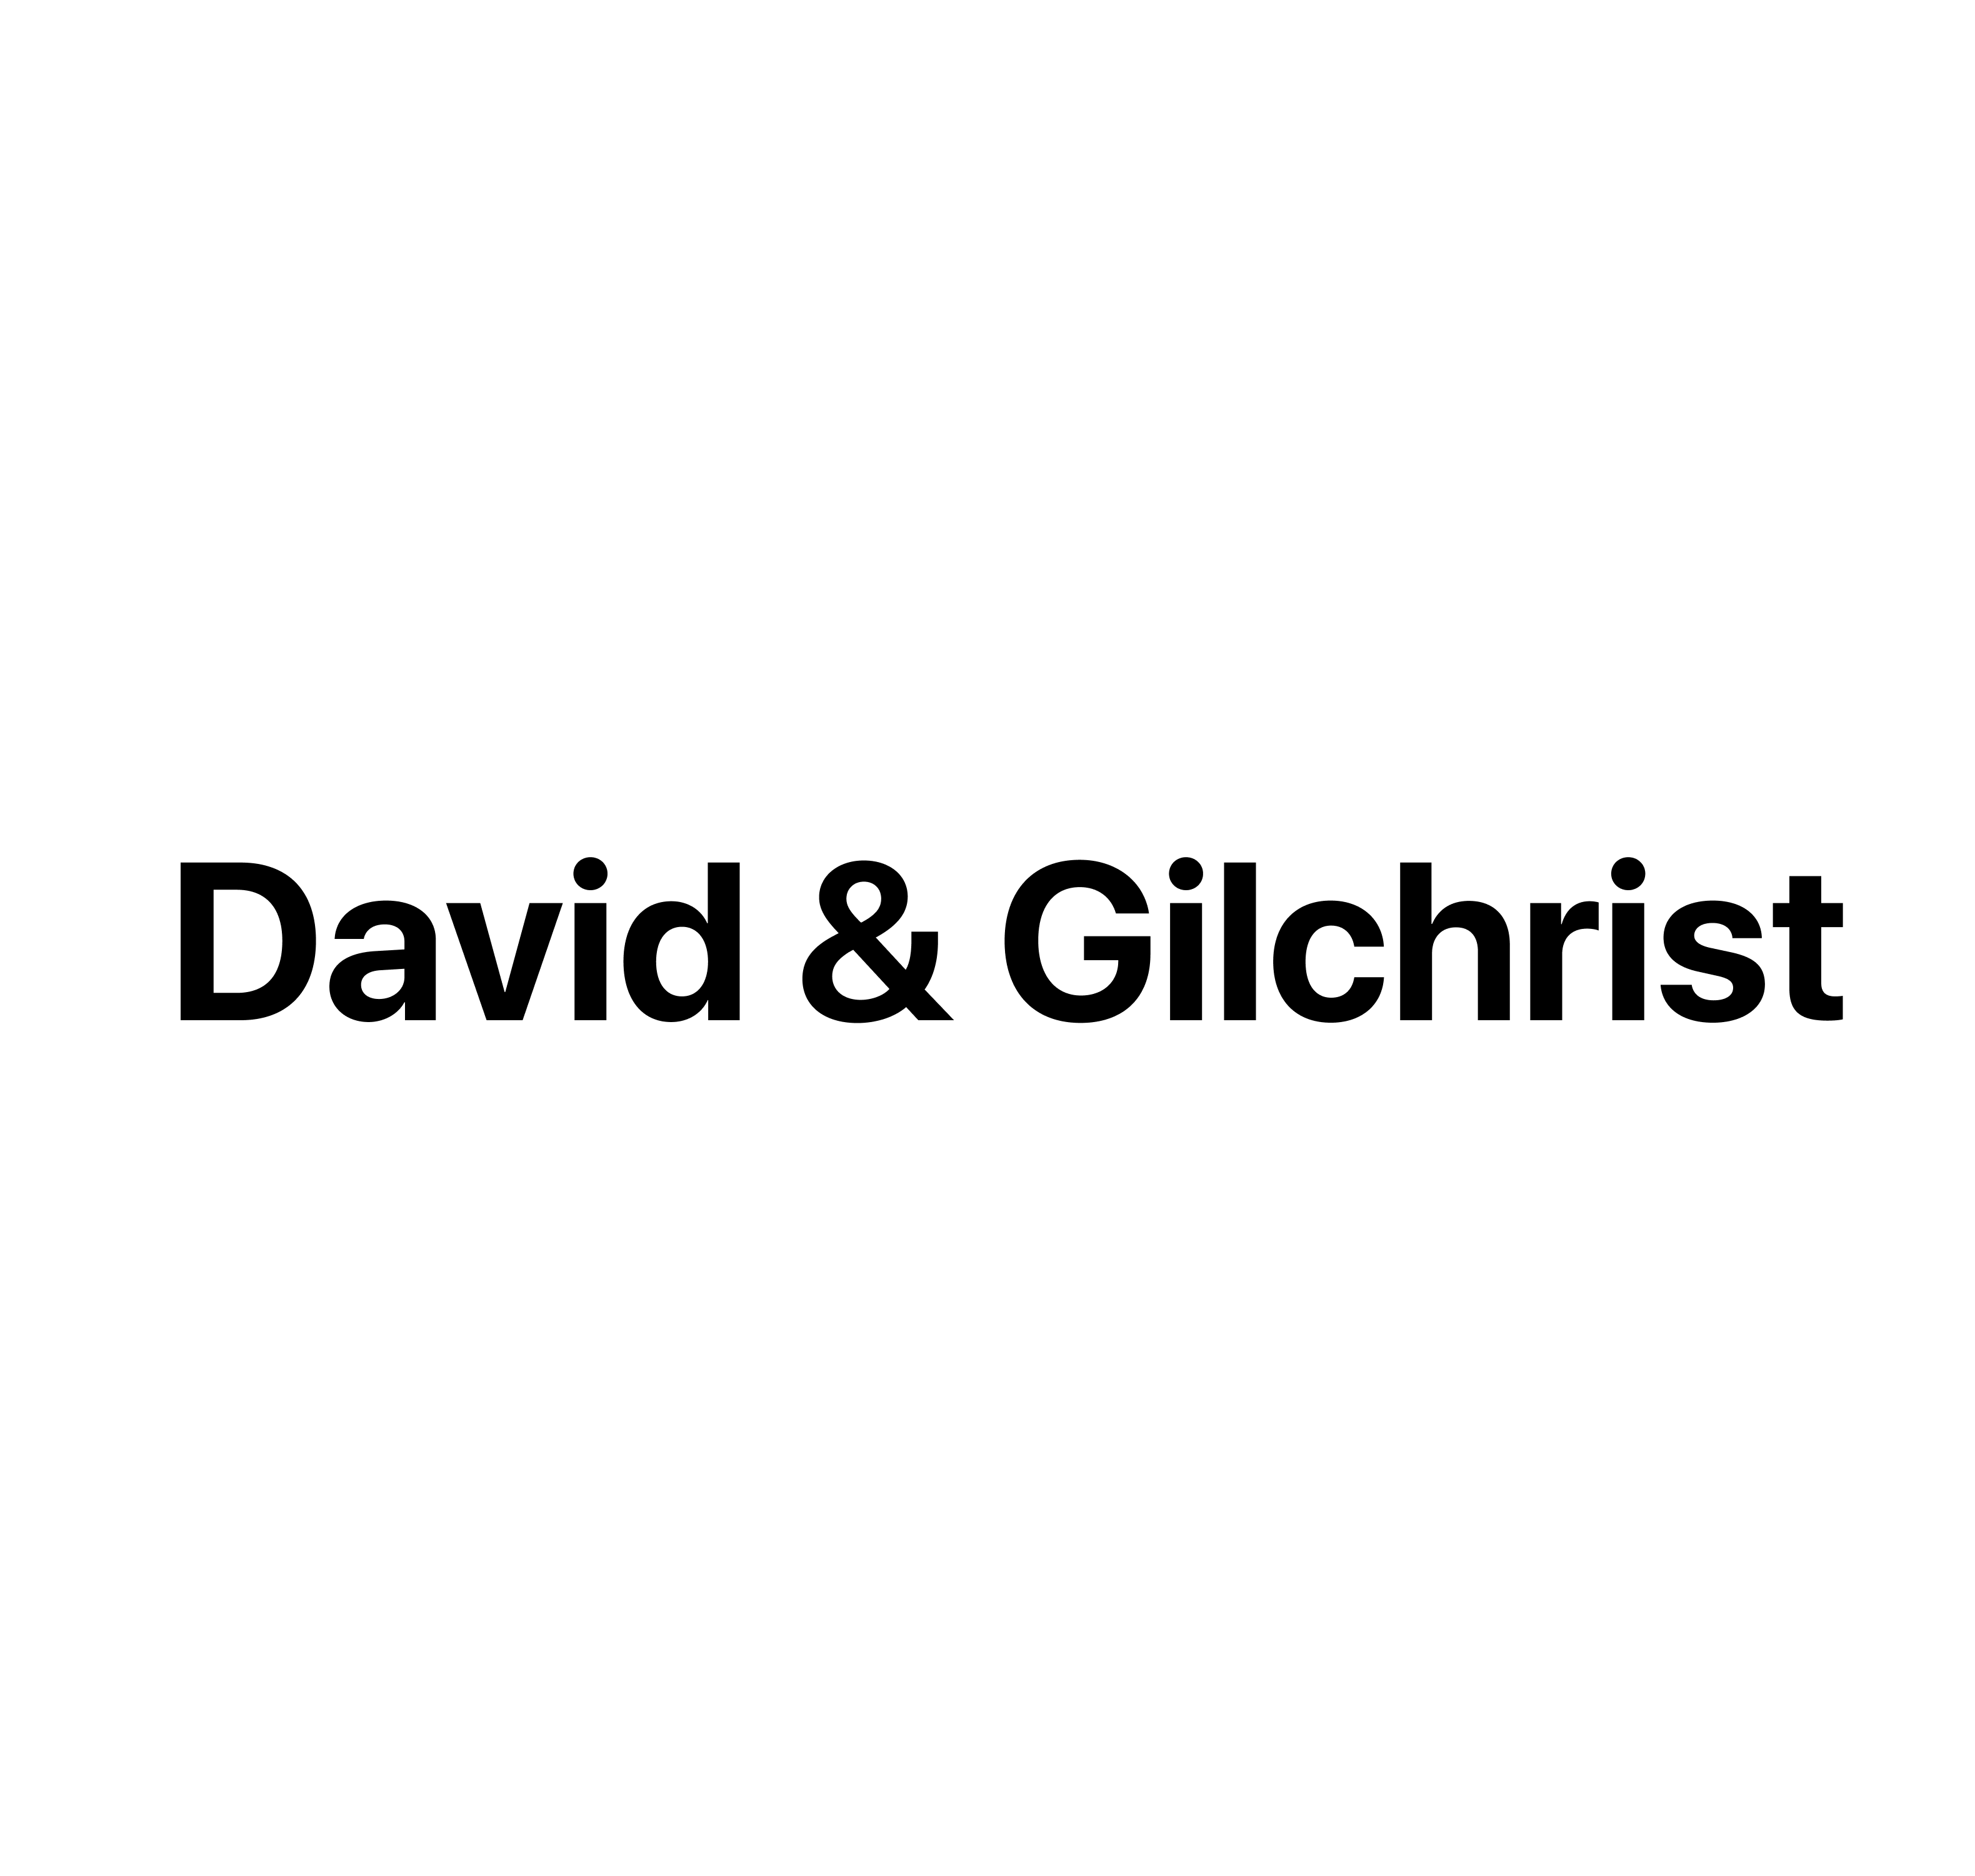 David & Gilchrist